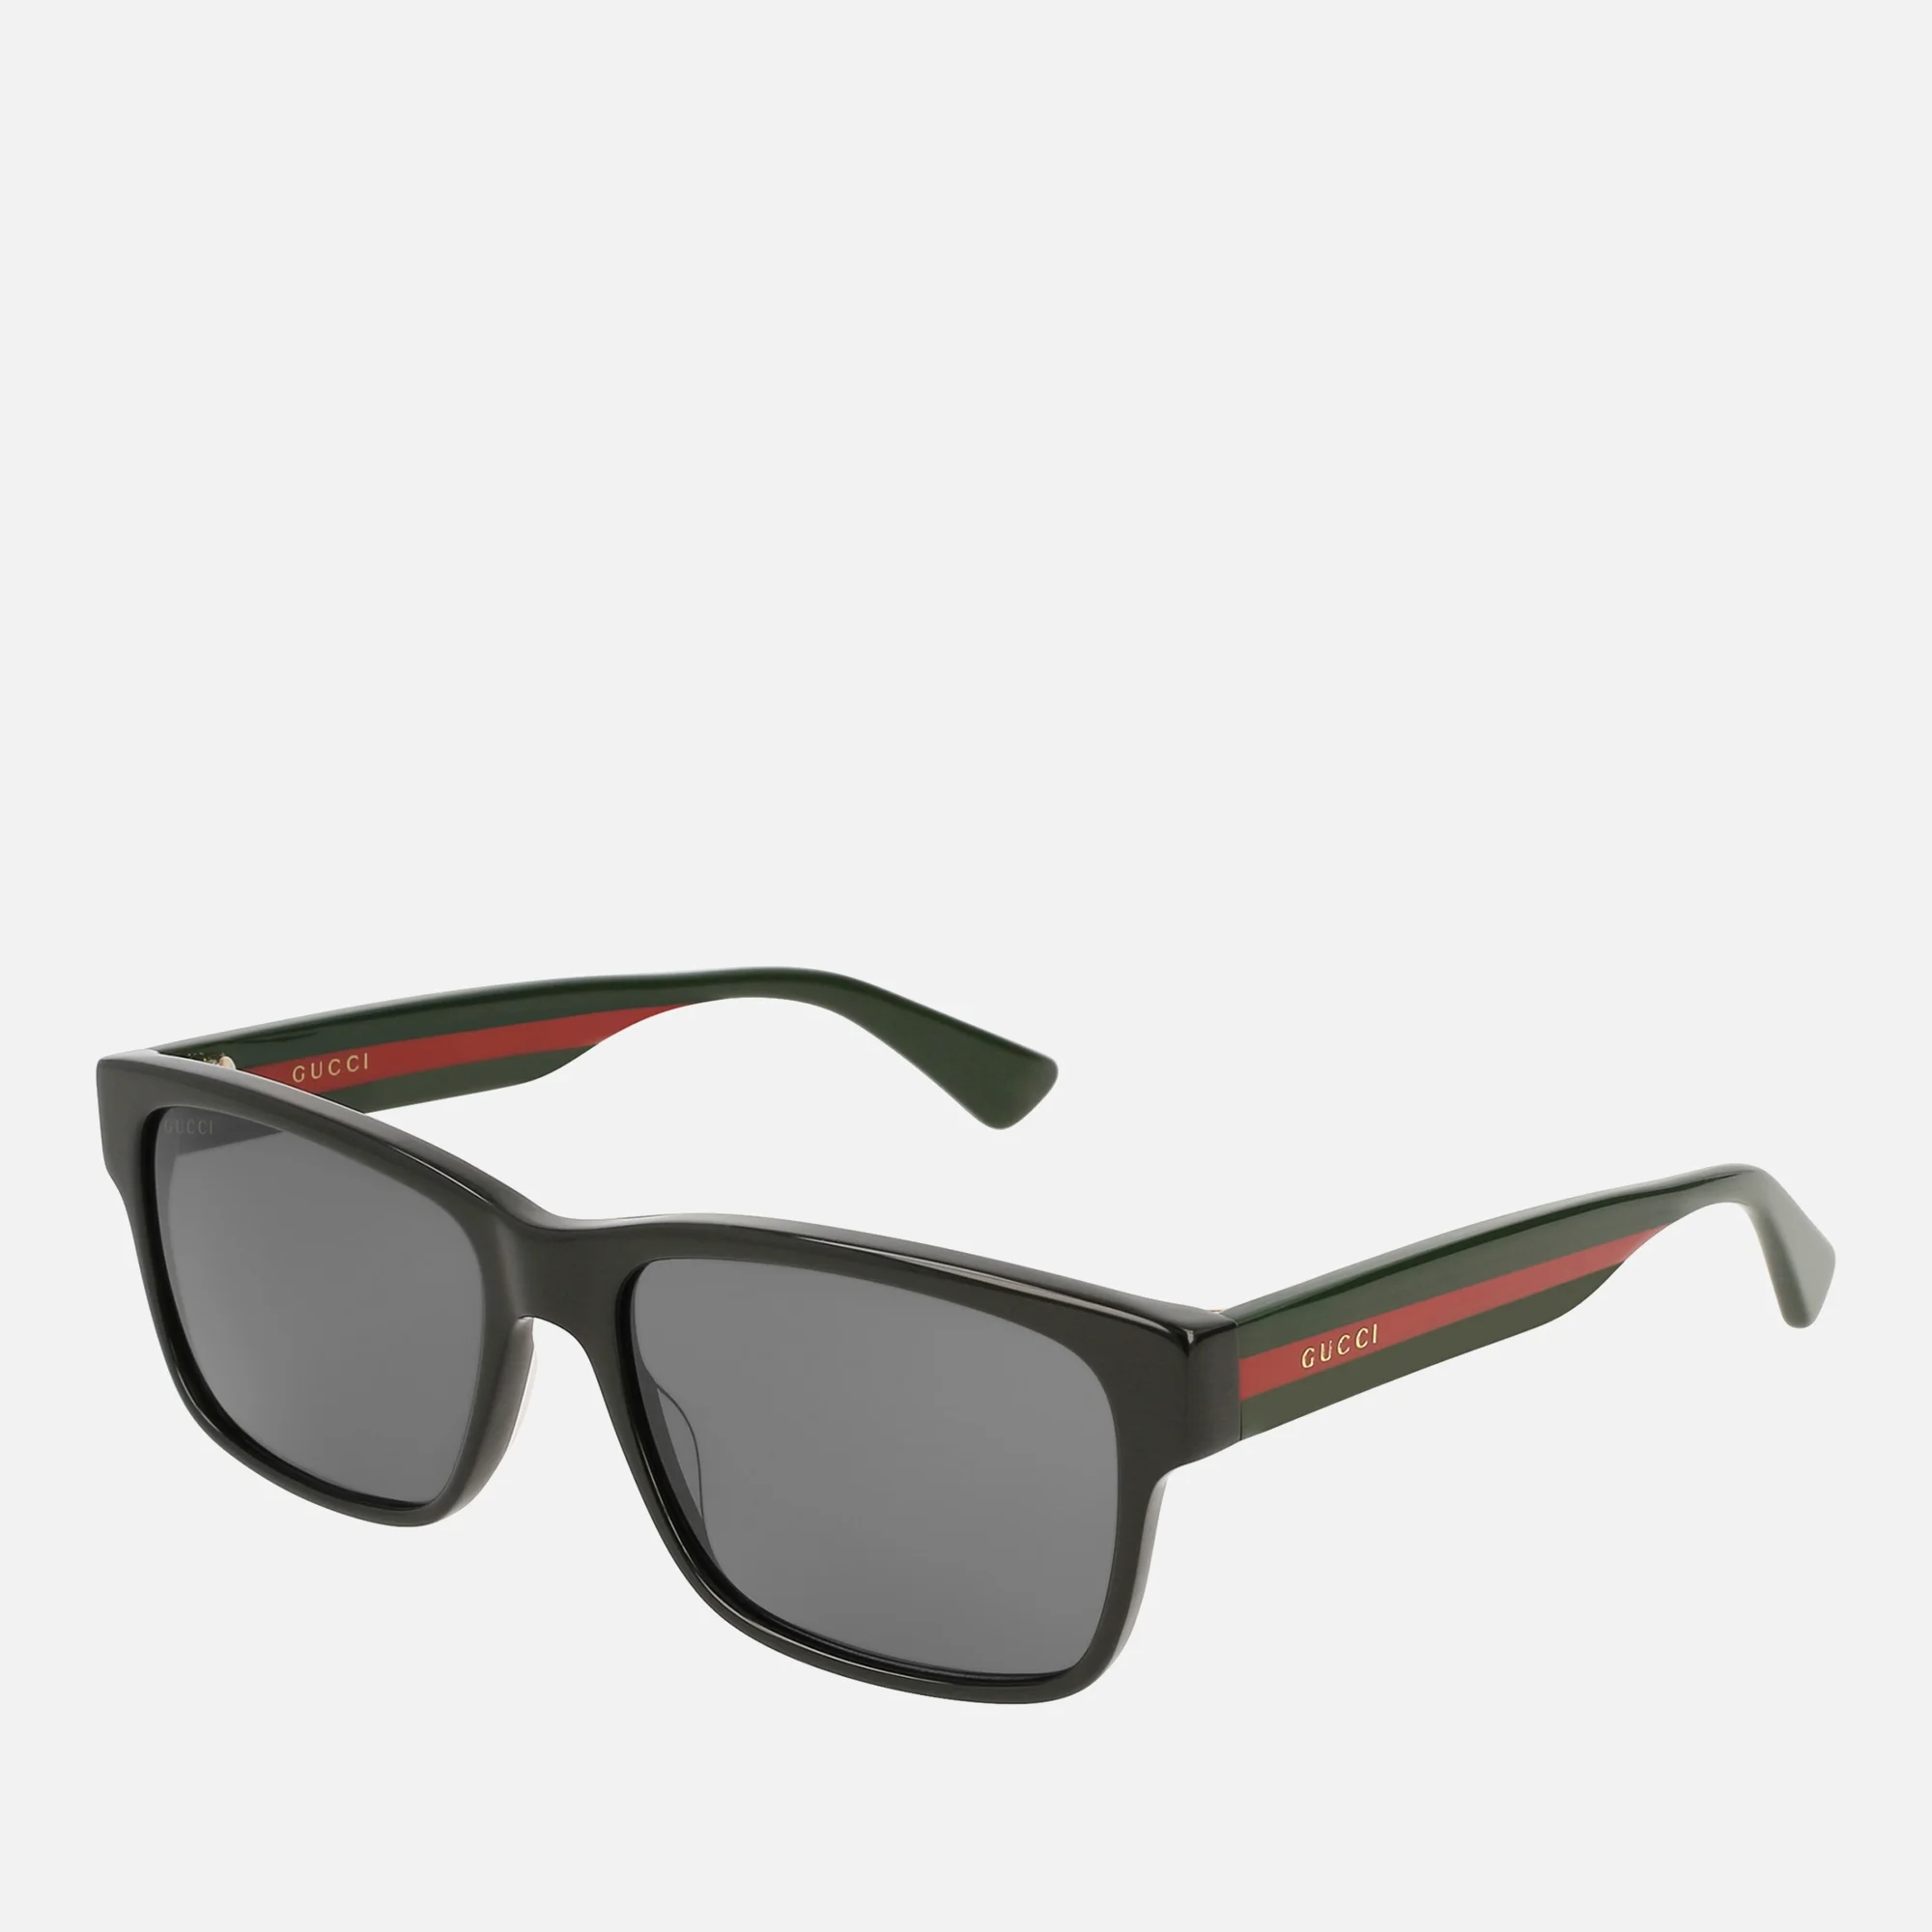 Gucci Acetate Square-Frame Sunglasses Image 1